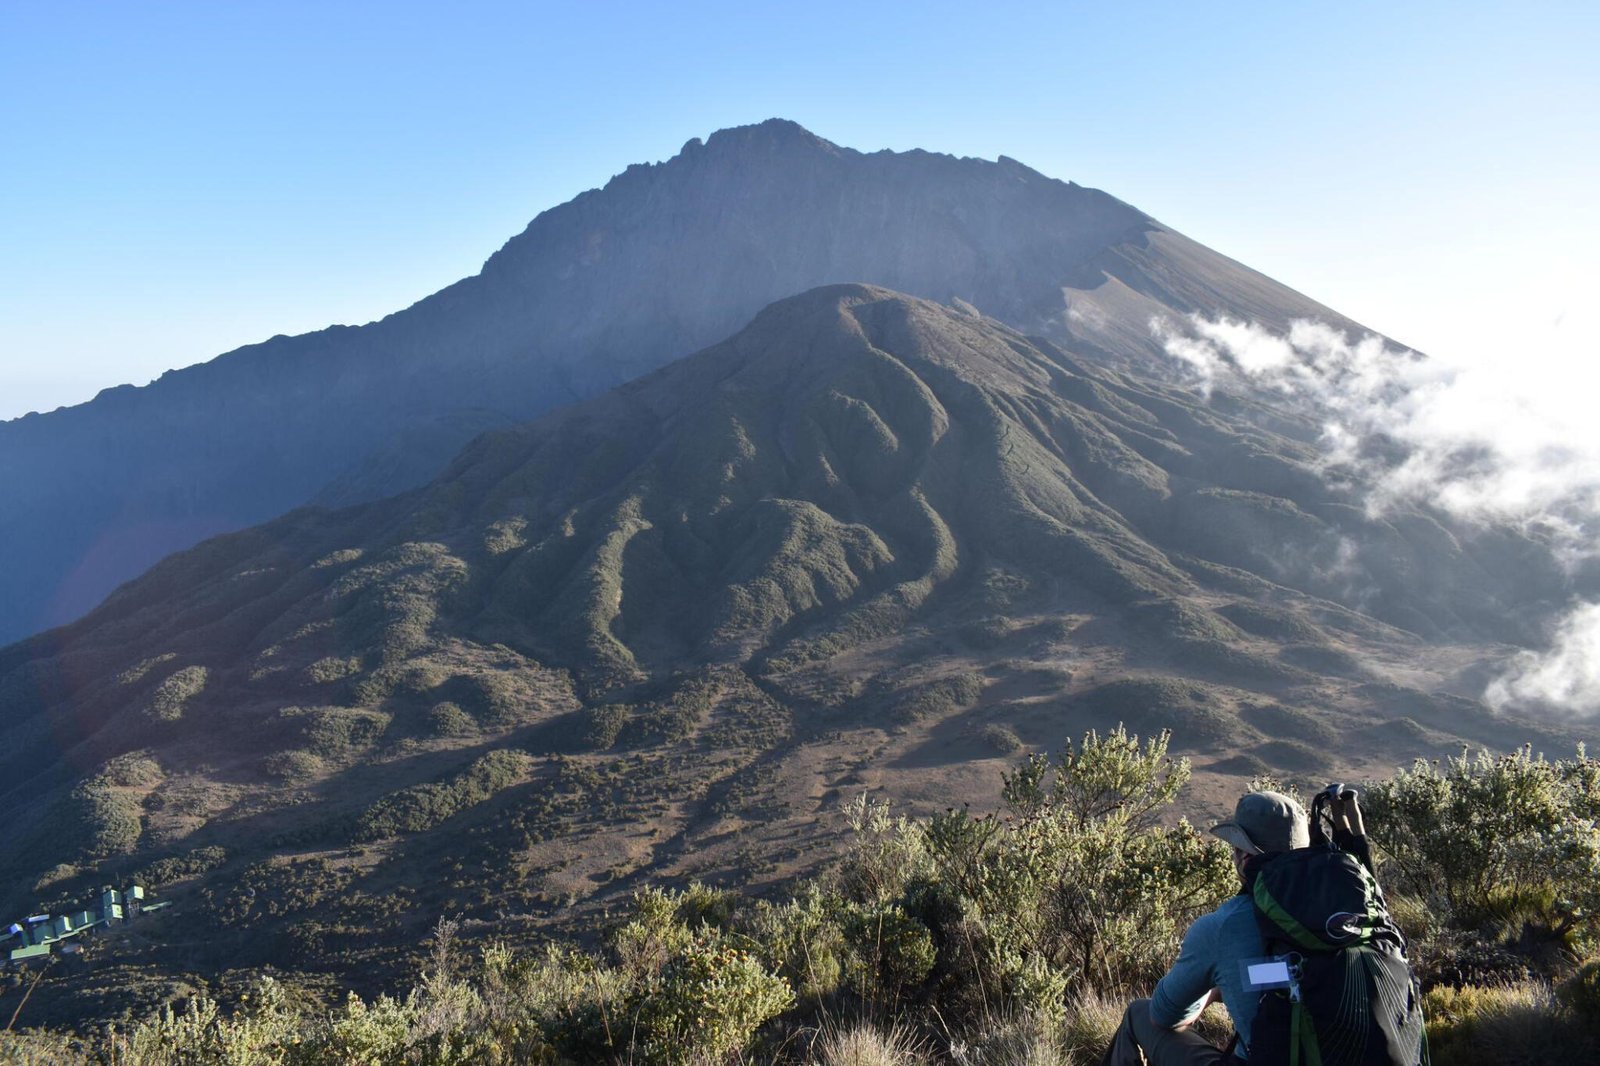 Kilimanjaro trails for Hiking, climbing & trekking